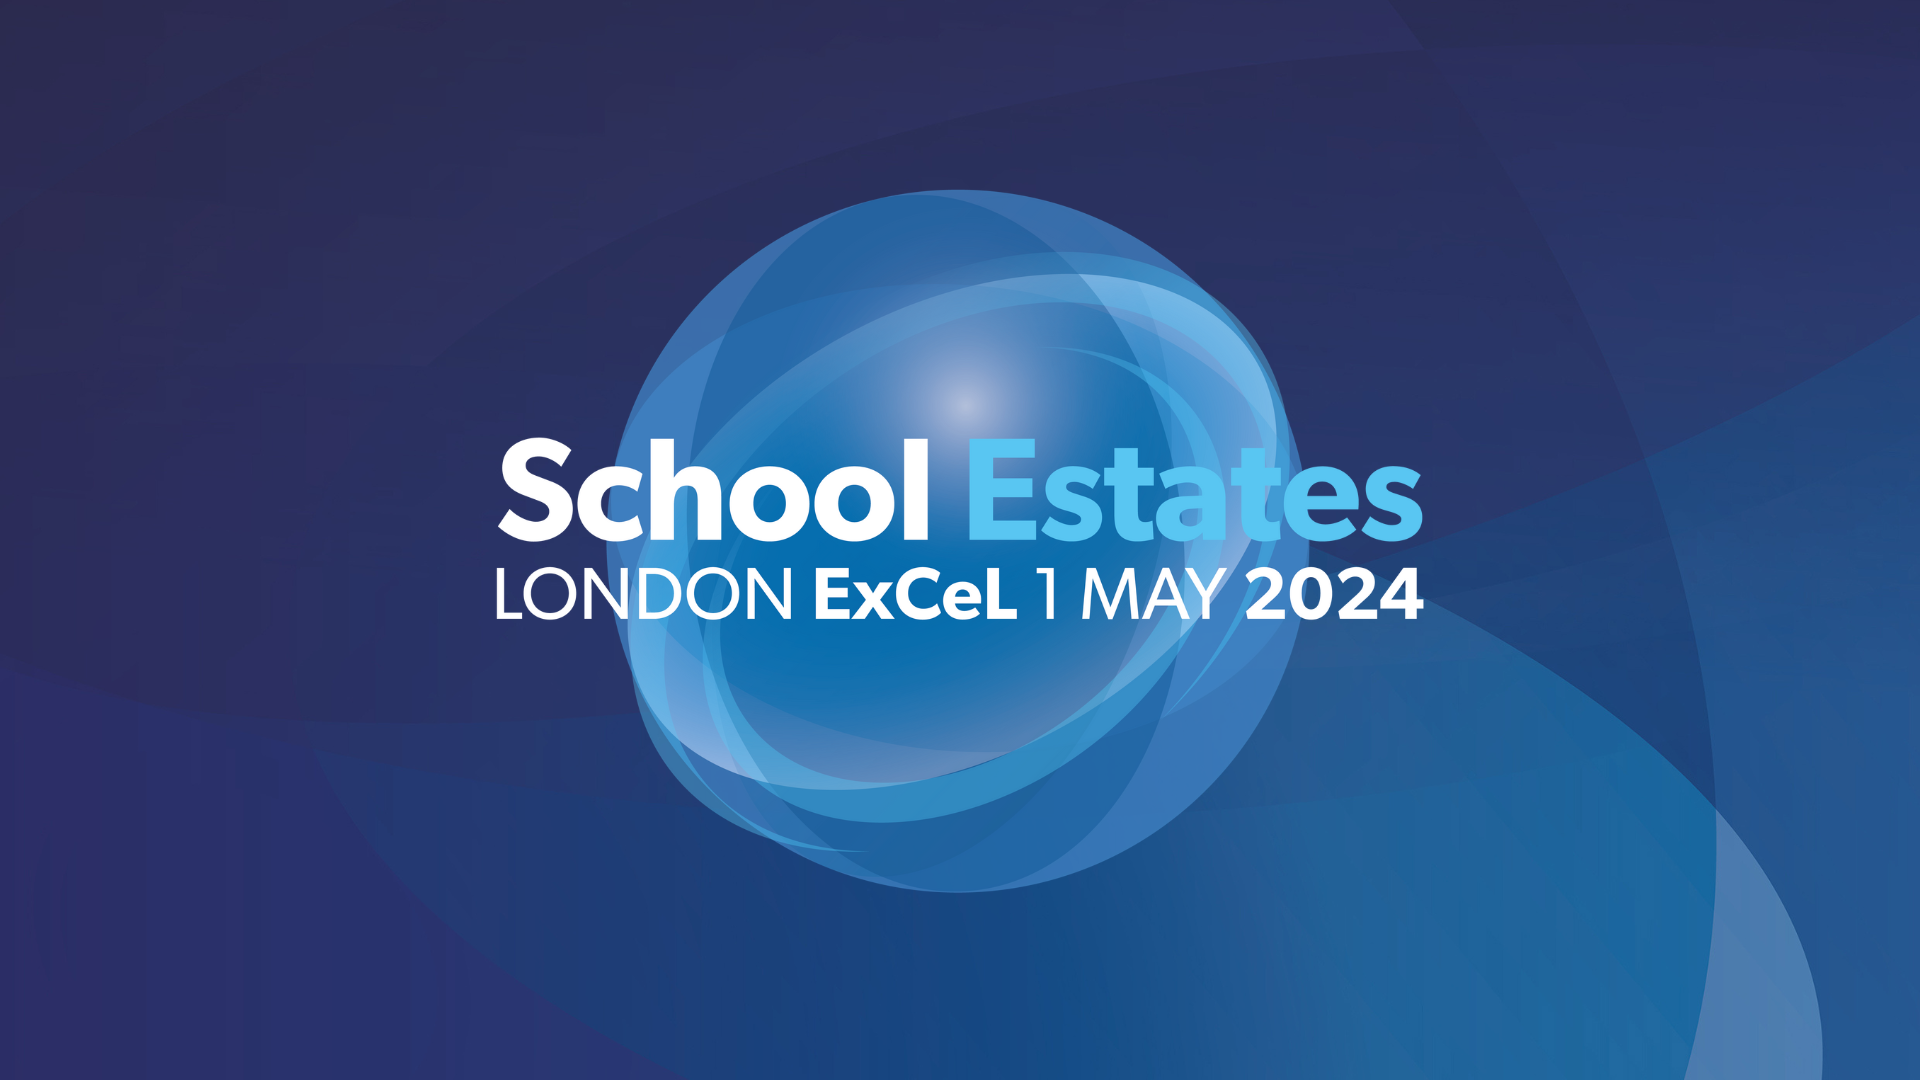 school estates summit 2024